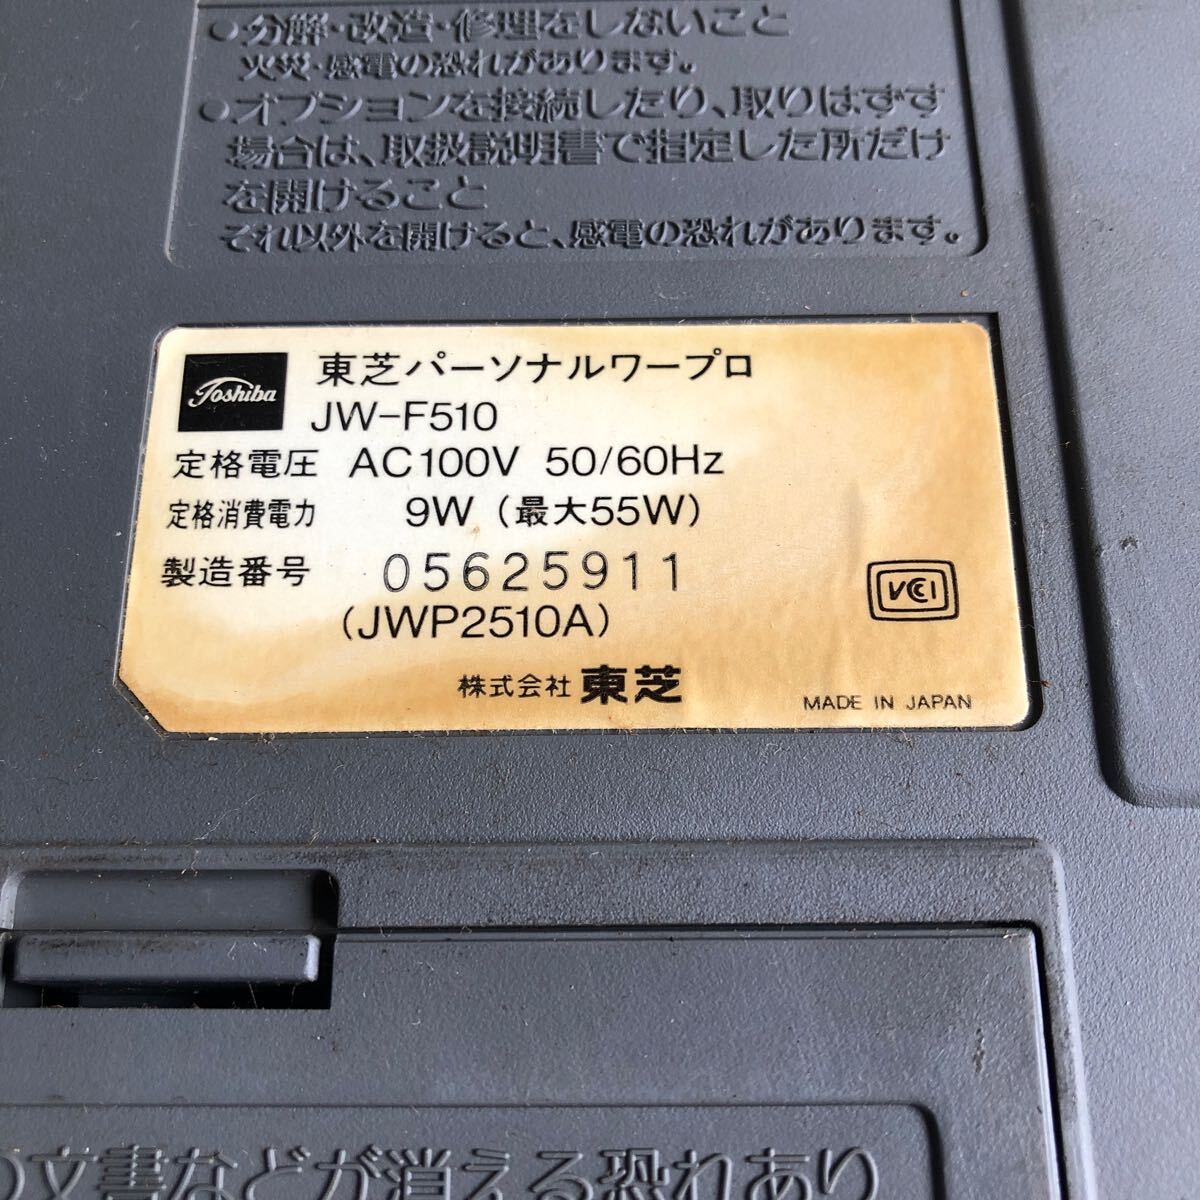  Toshiba TOSHIBA word-processor JW-F510 junk 